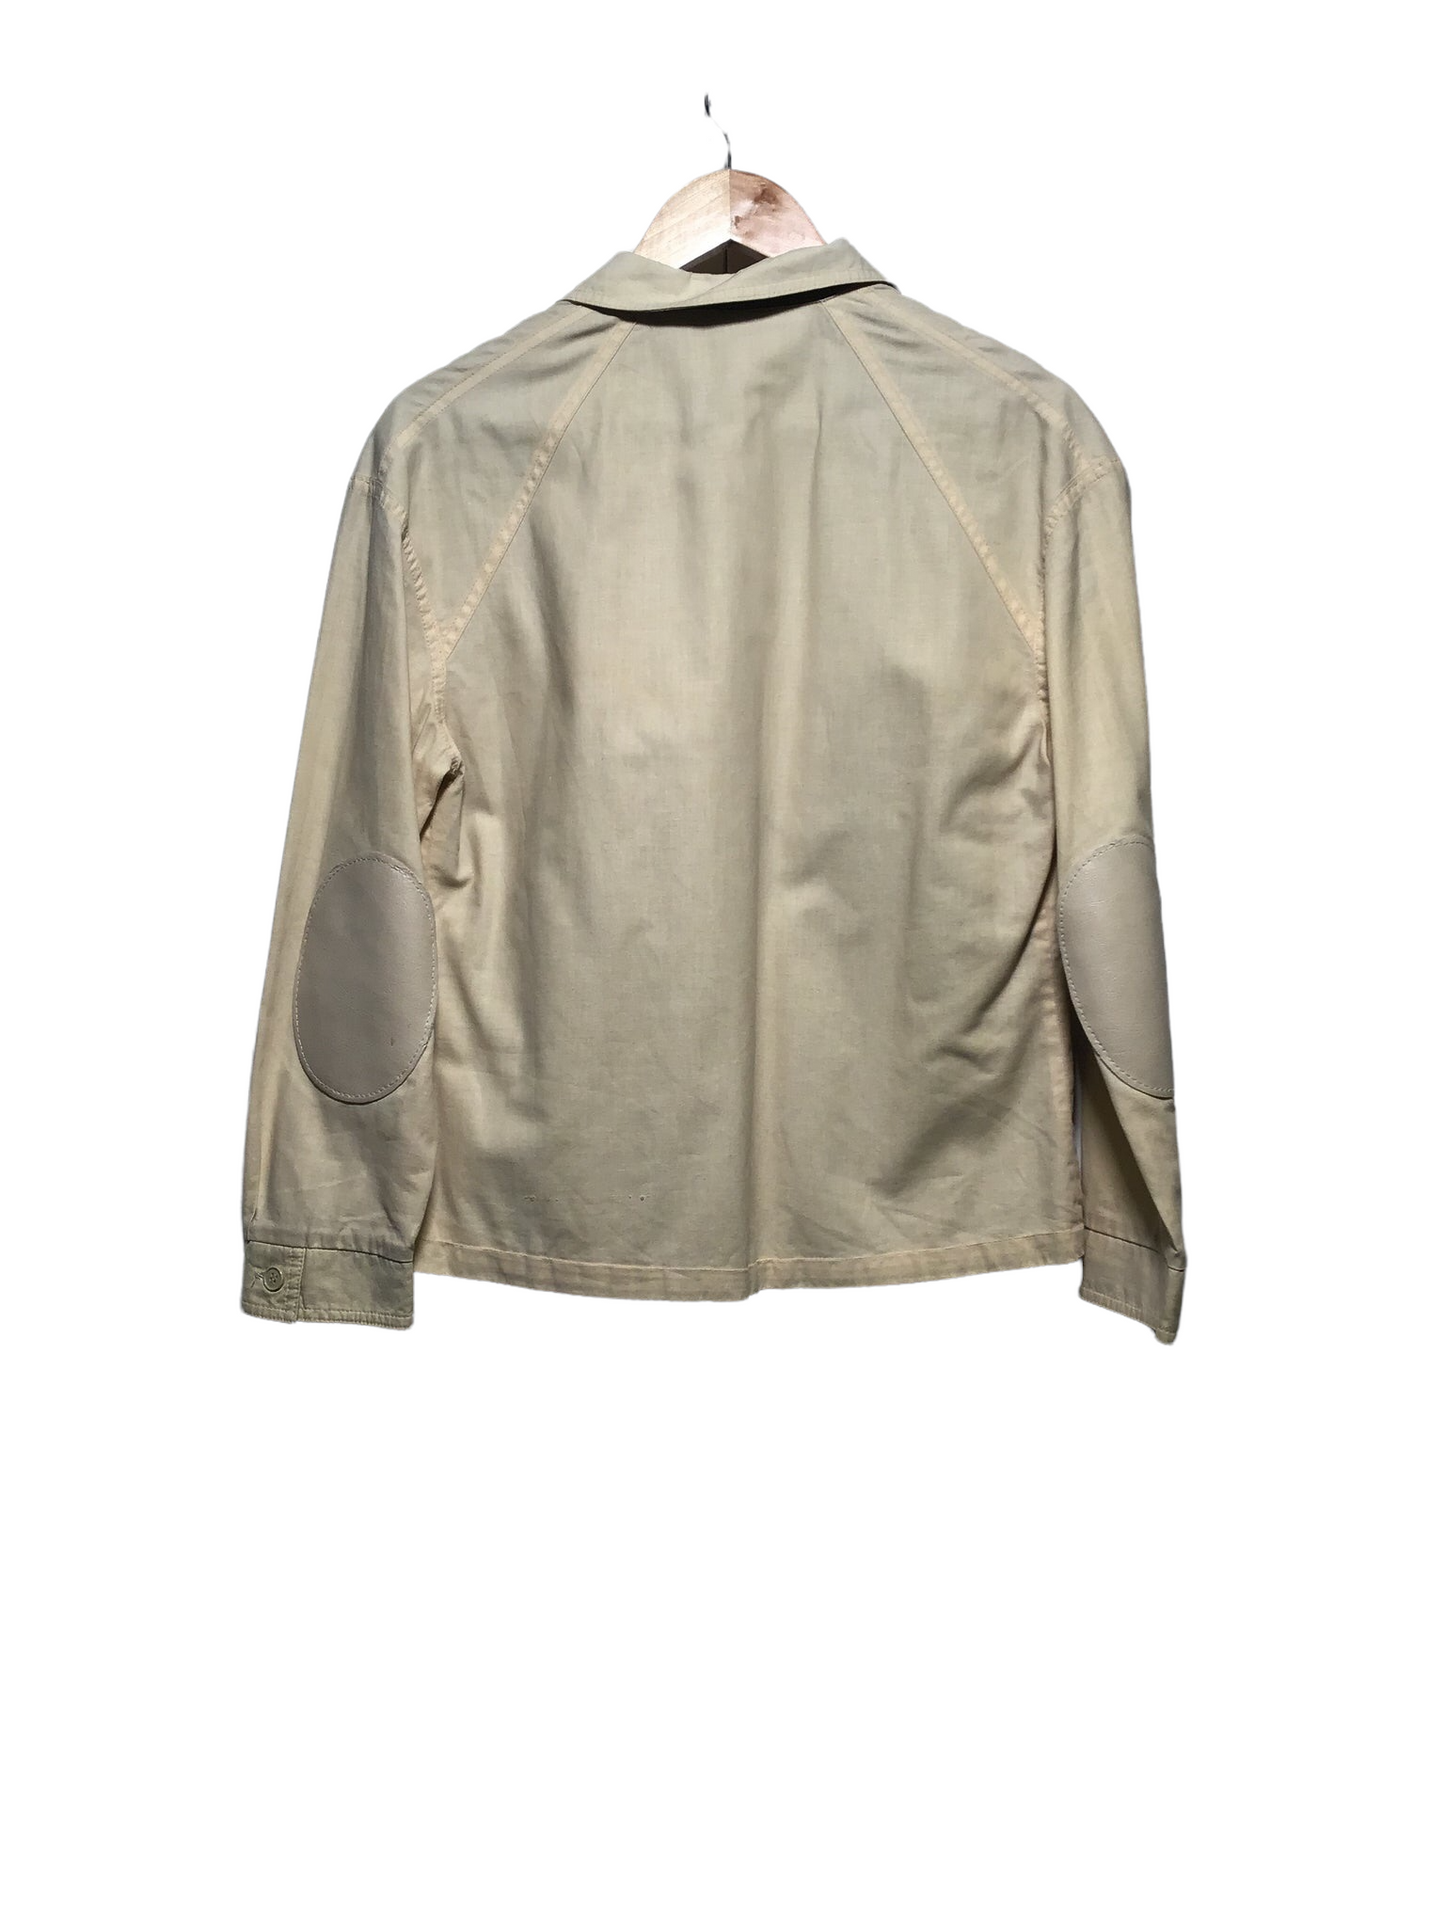 Zip Up Cotton Jacket (Size S)